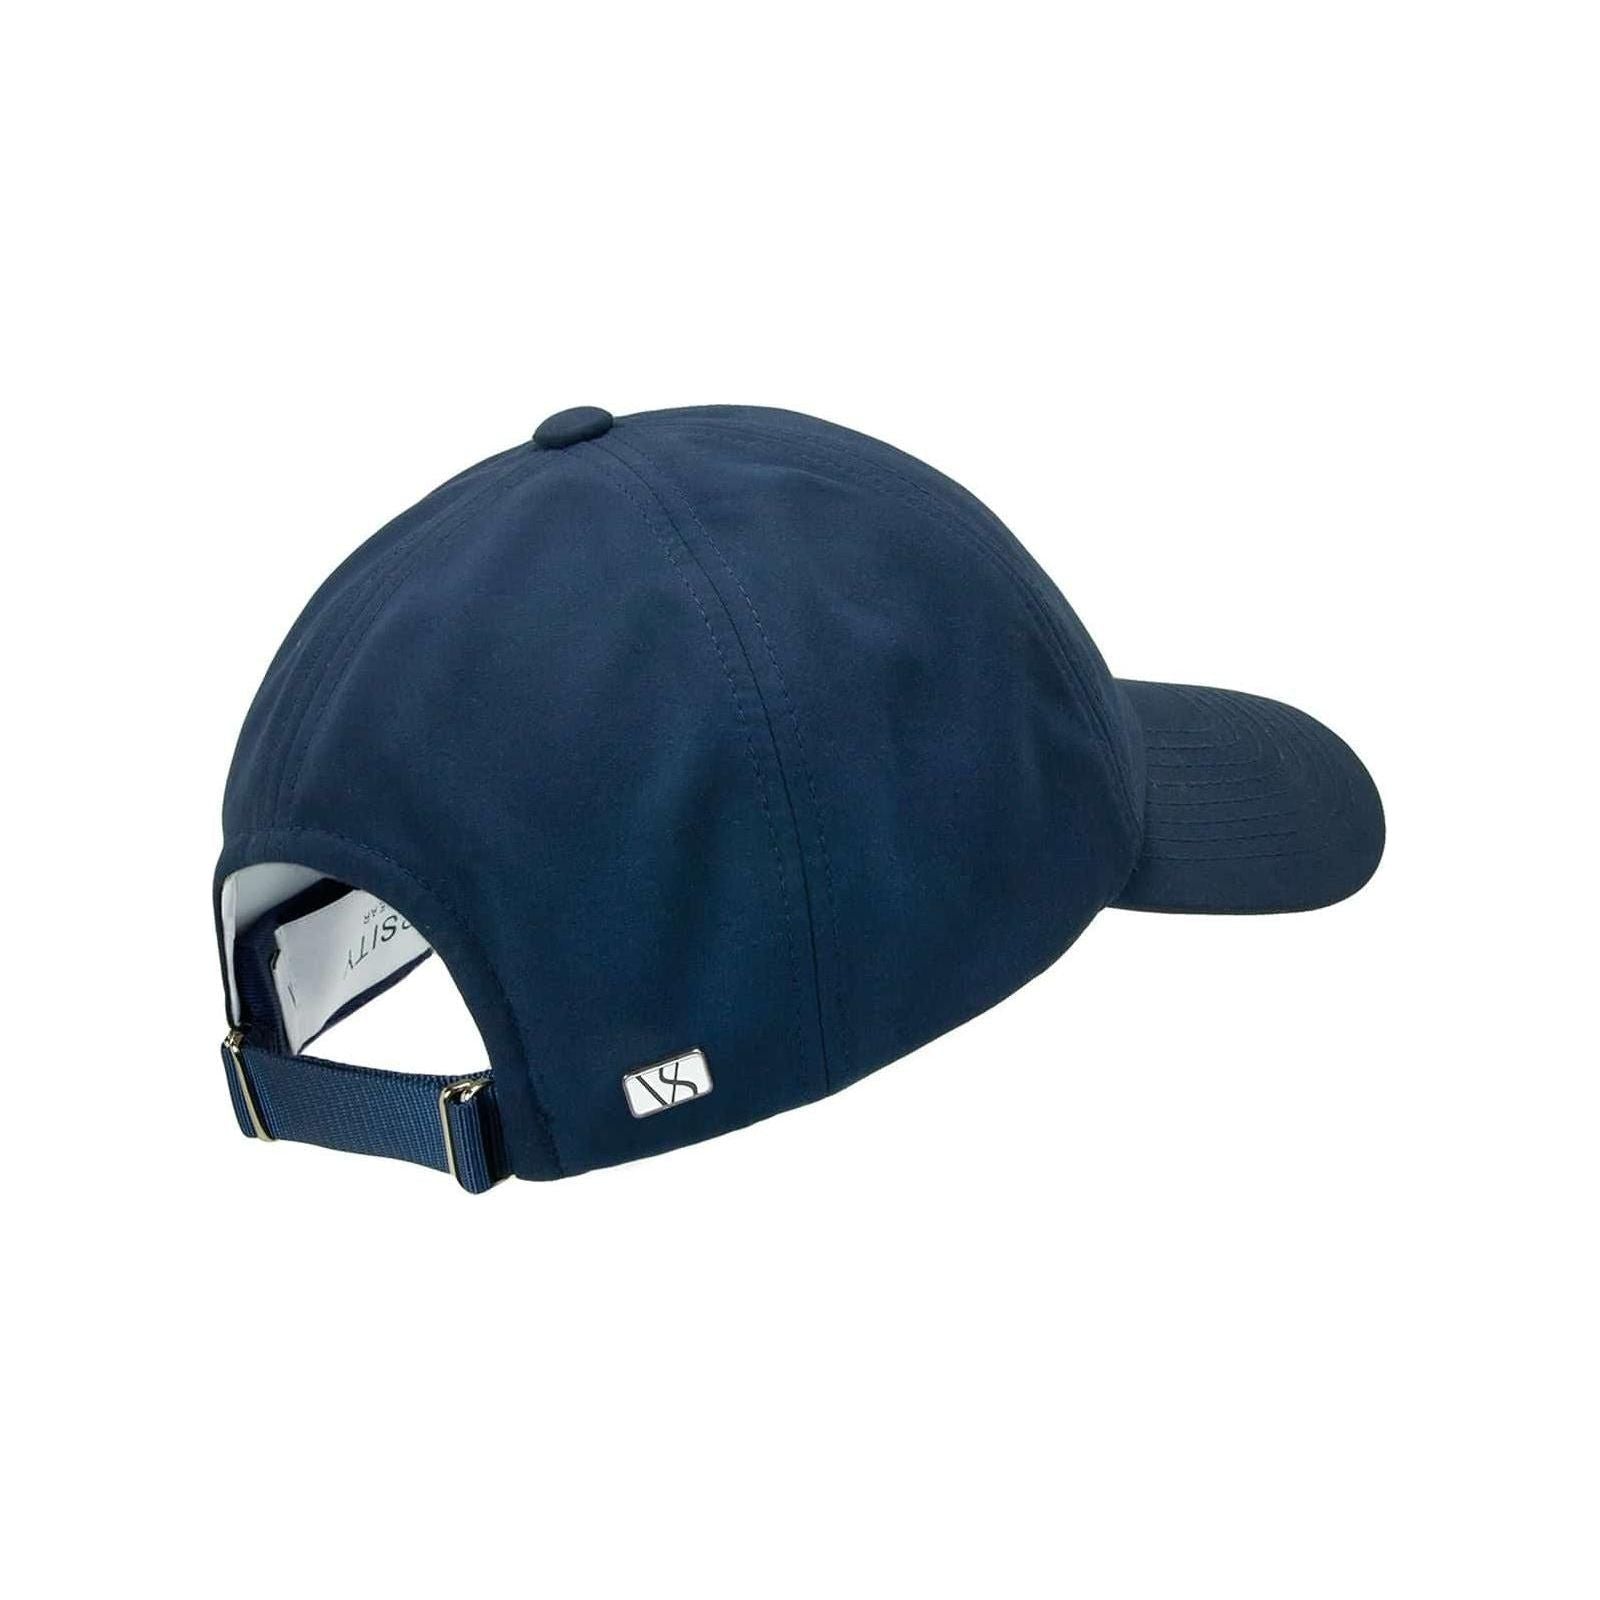 Varsity Headwear Baseball Cap Soft Cotton Cap, Prussian Blue